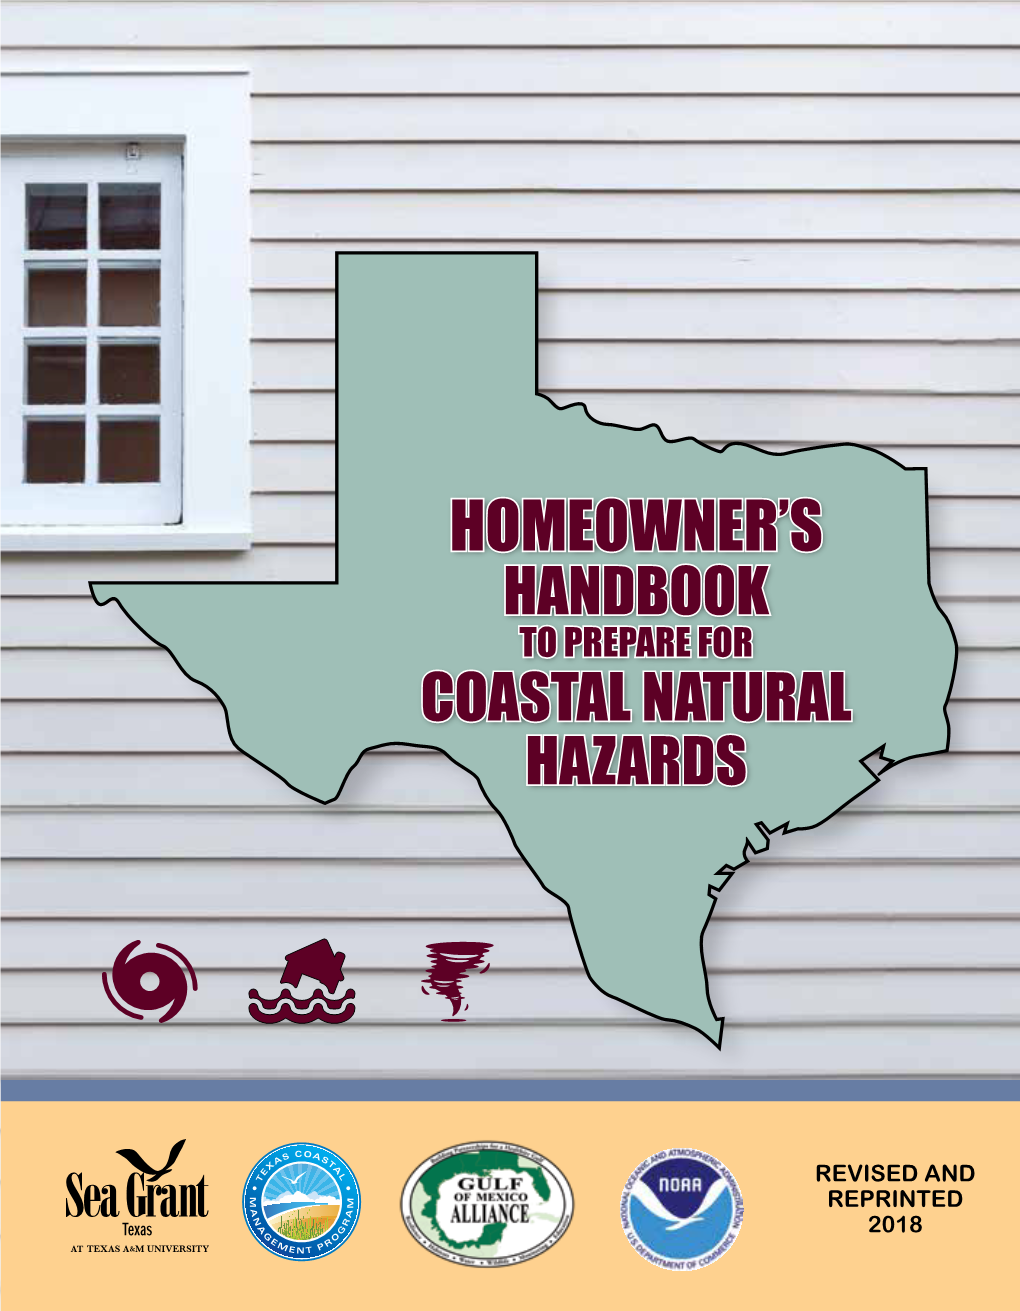 Homeowner's Handbook to Prepare for Coastal Natural Hazards